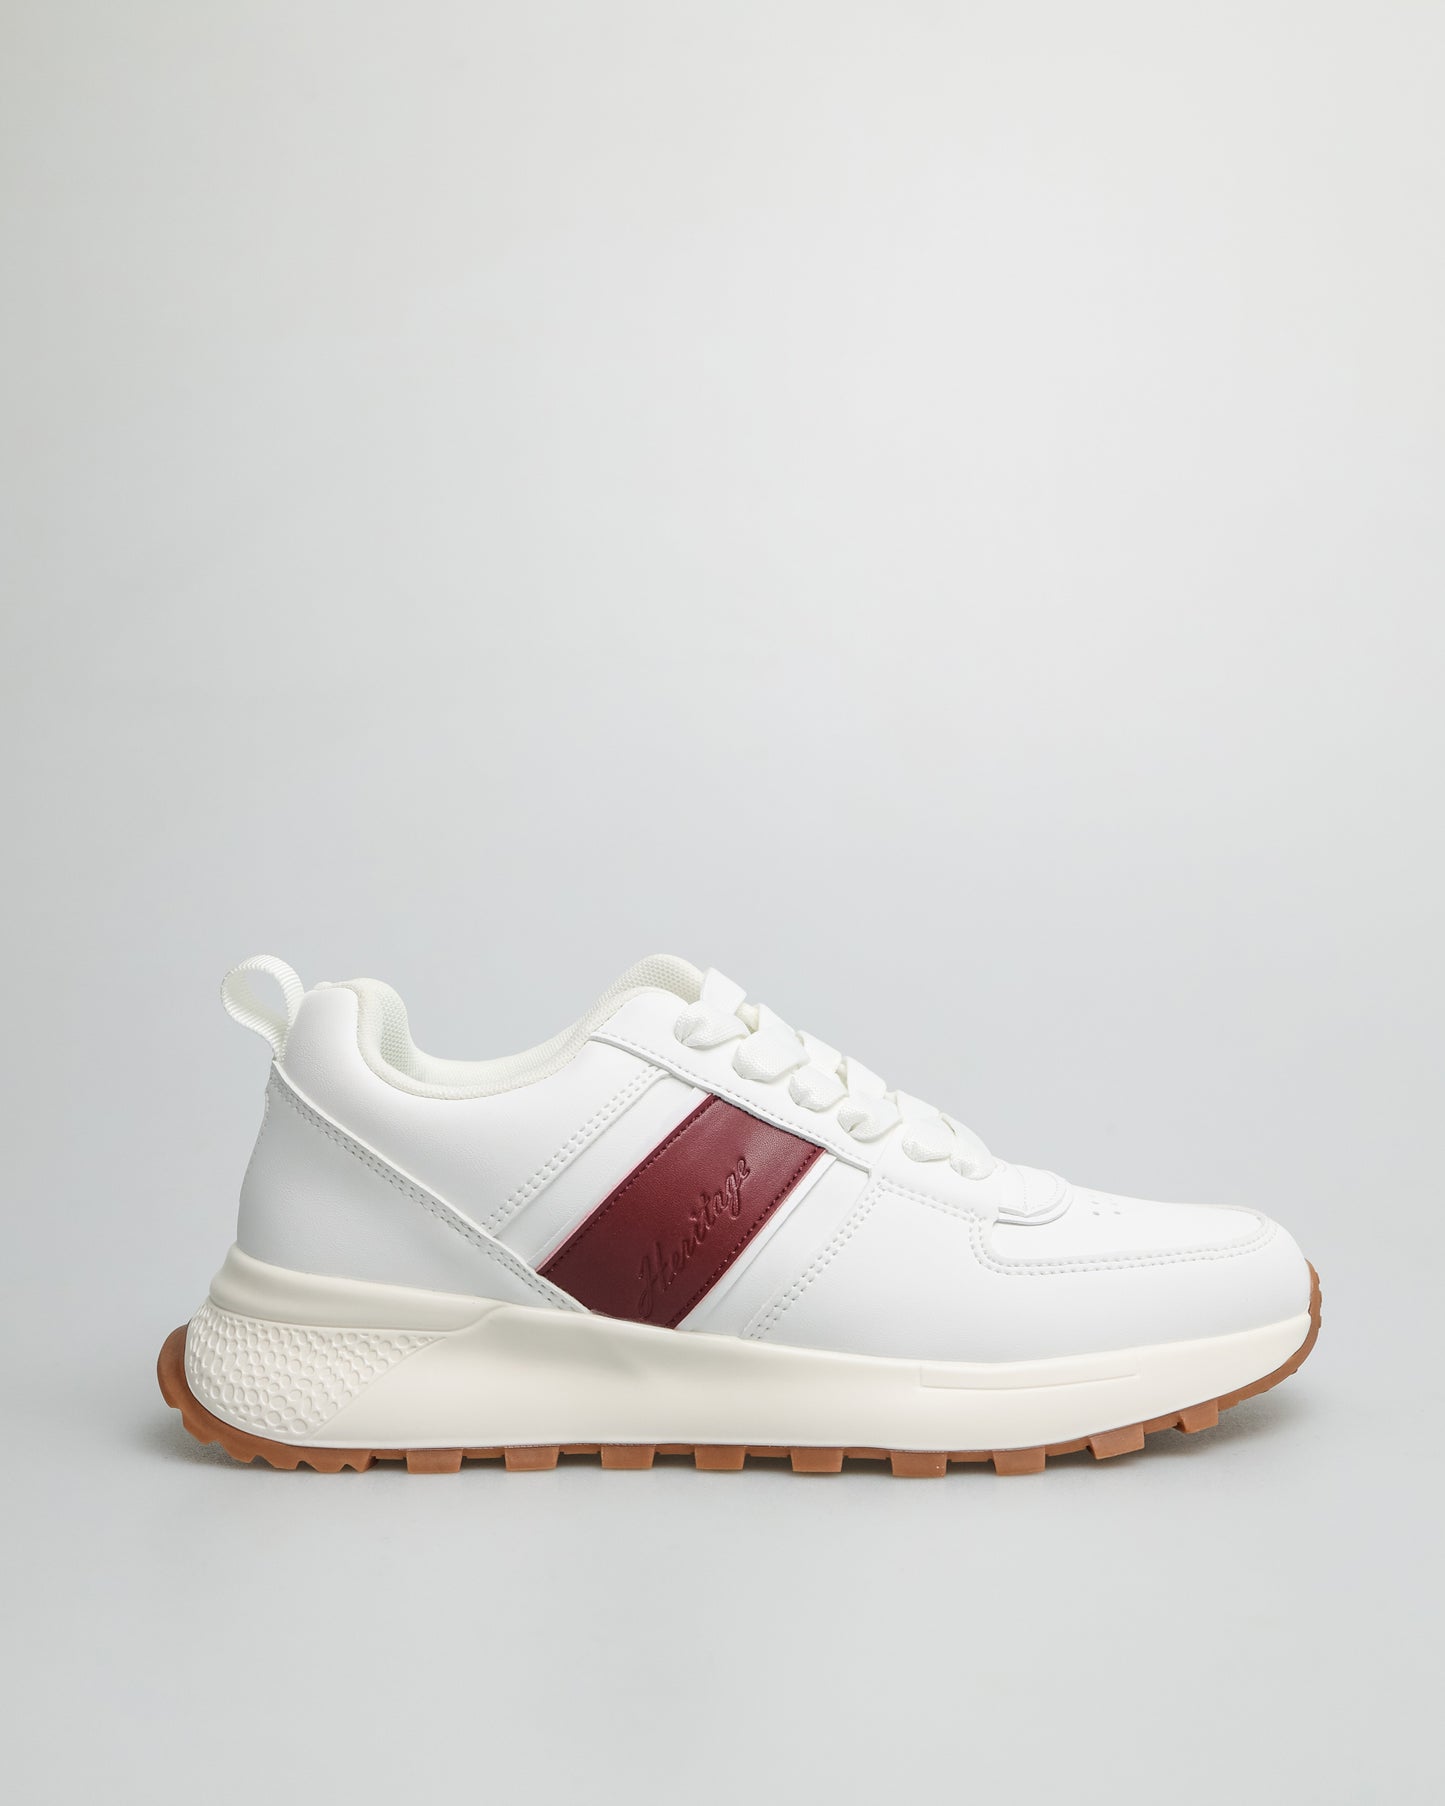 Tomaz TY021 Men's Sneakers (White/Red) – TOMAZ